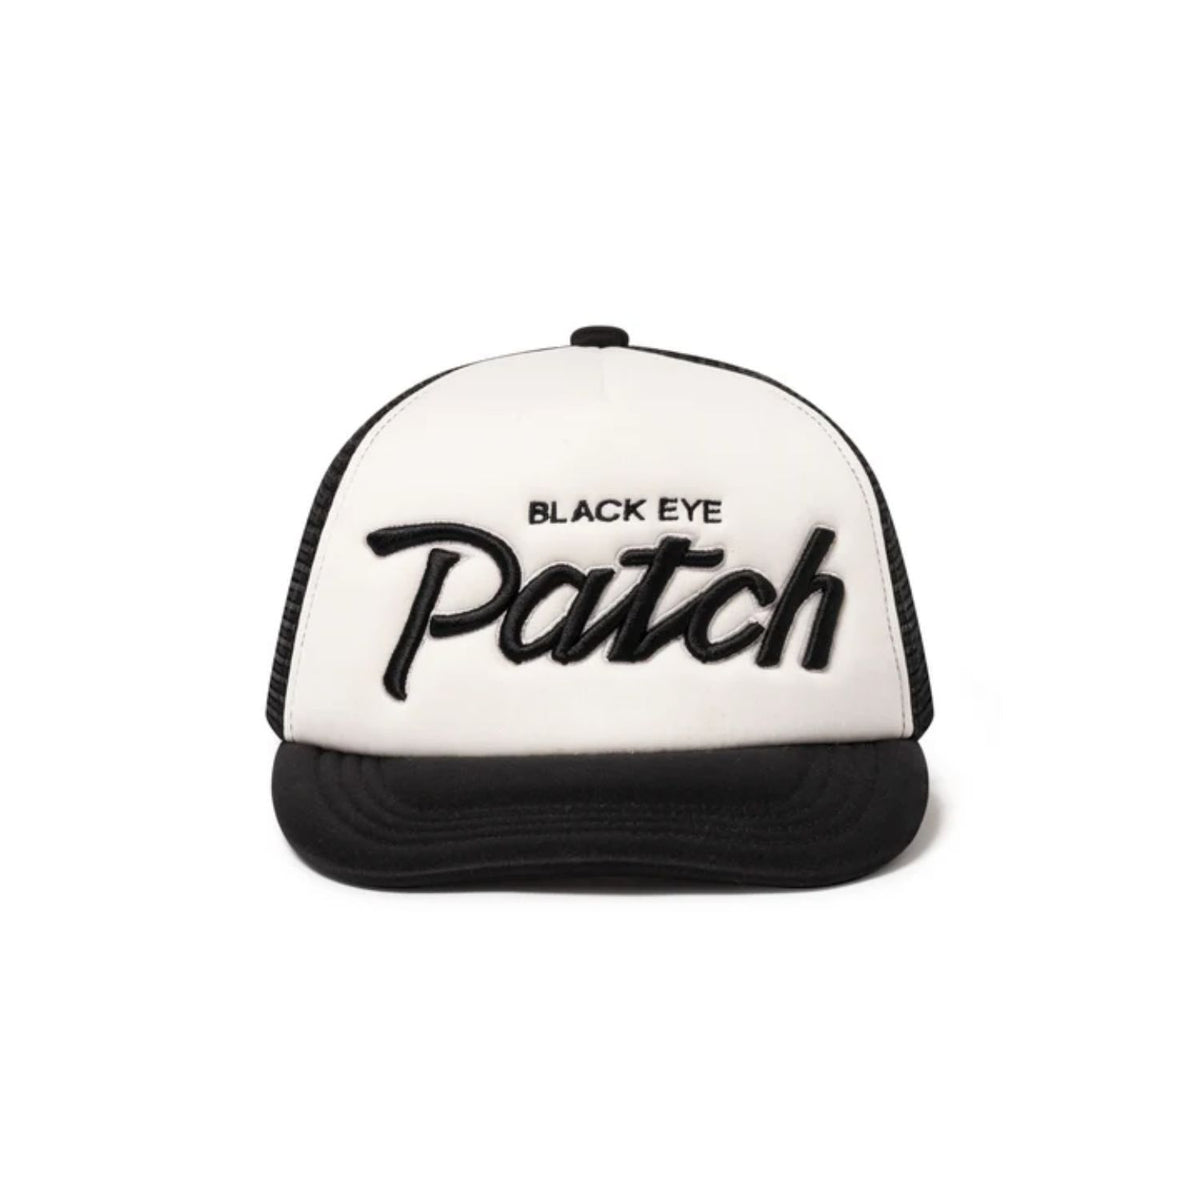 TEAM LOGO MESH CAP - Black Eye Patch (ブラックアイパッチ) - cap 